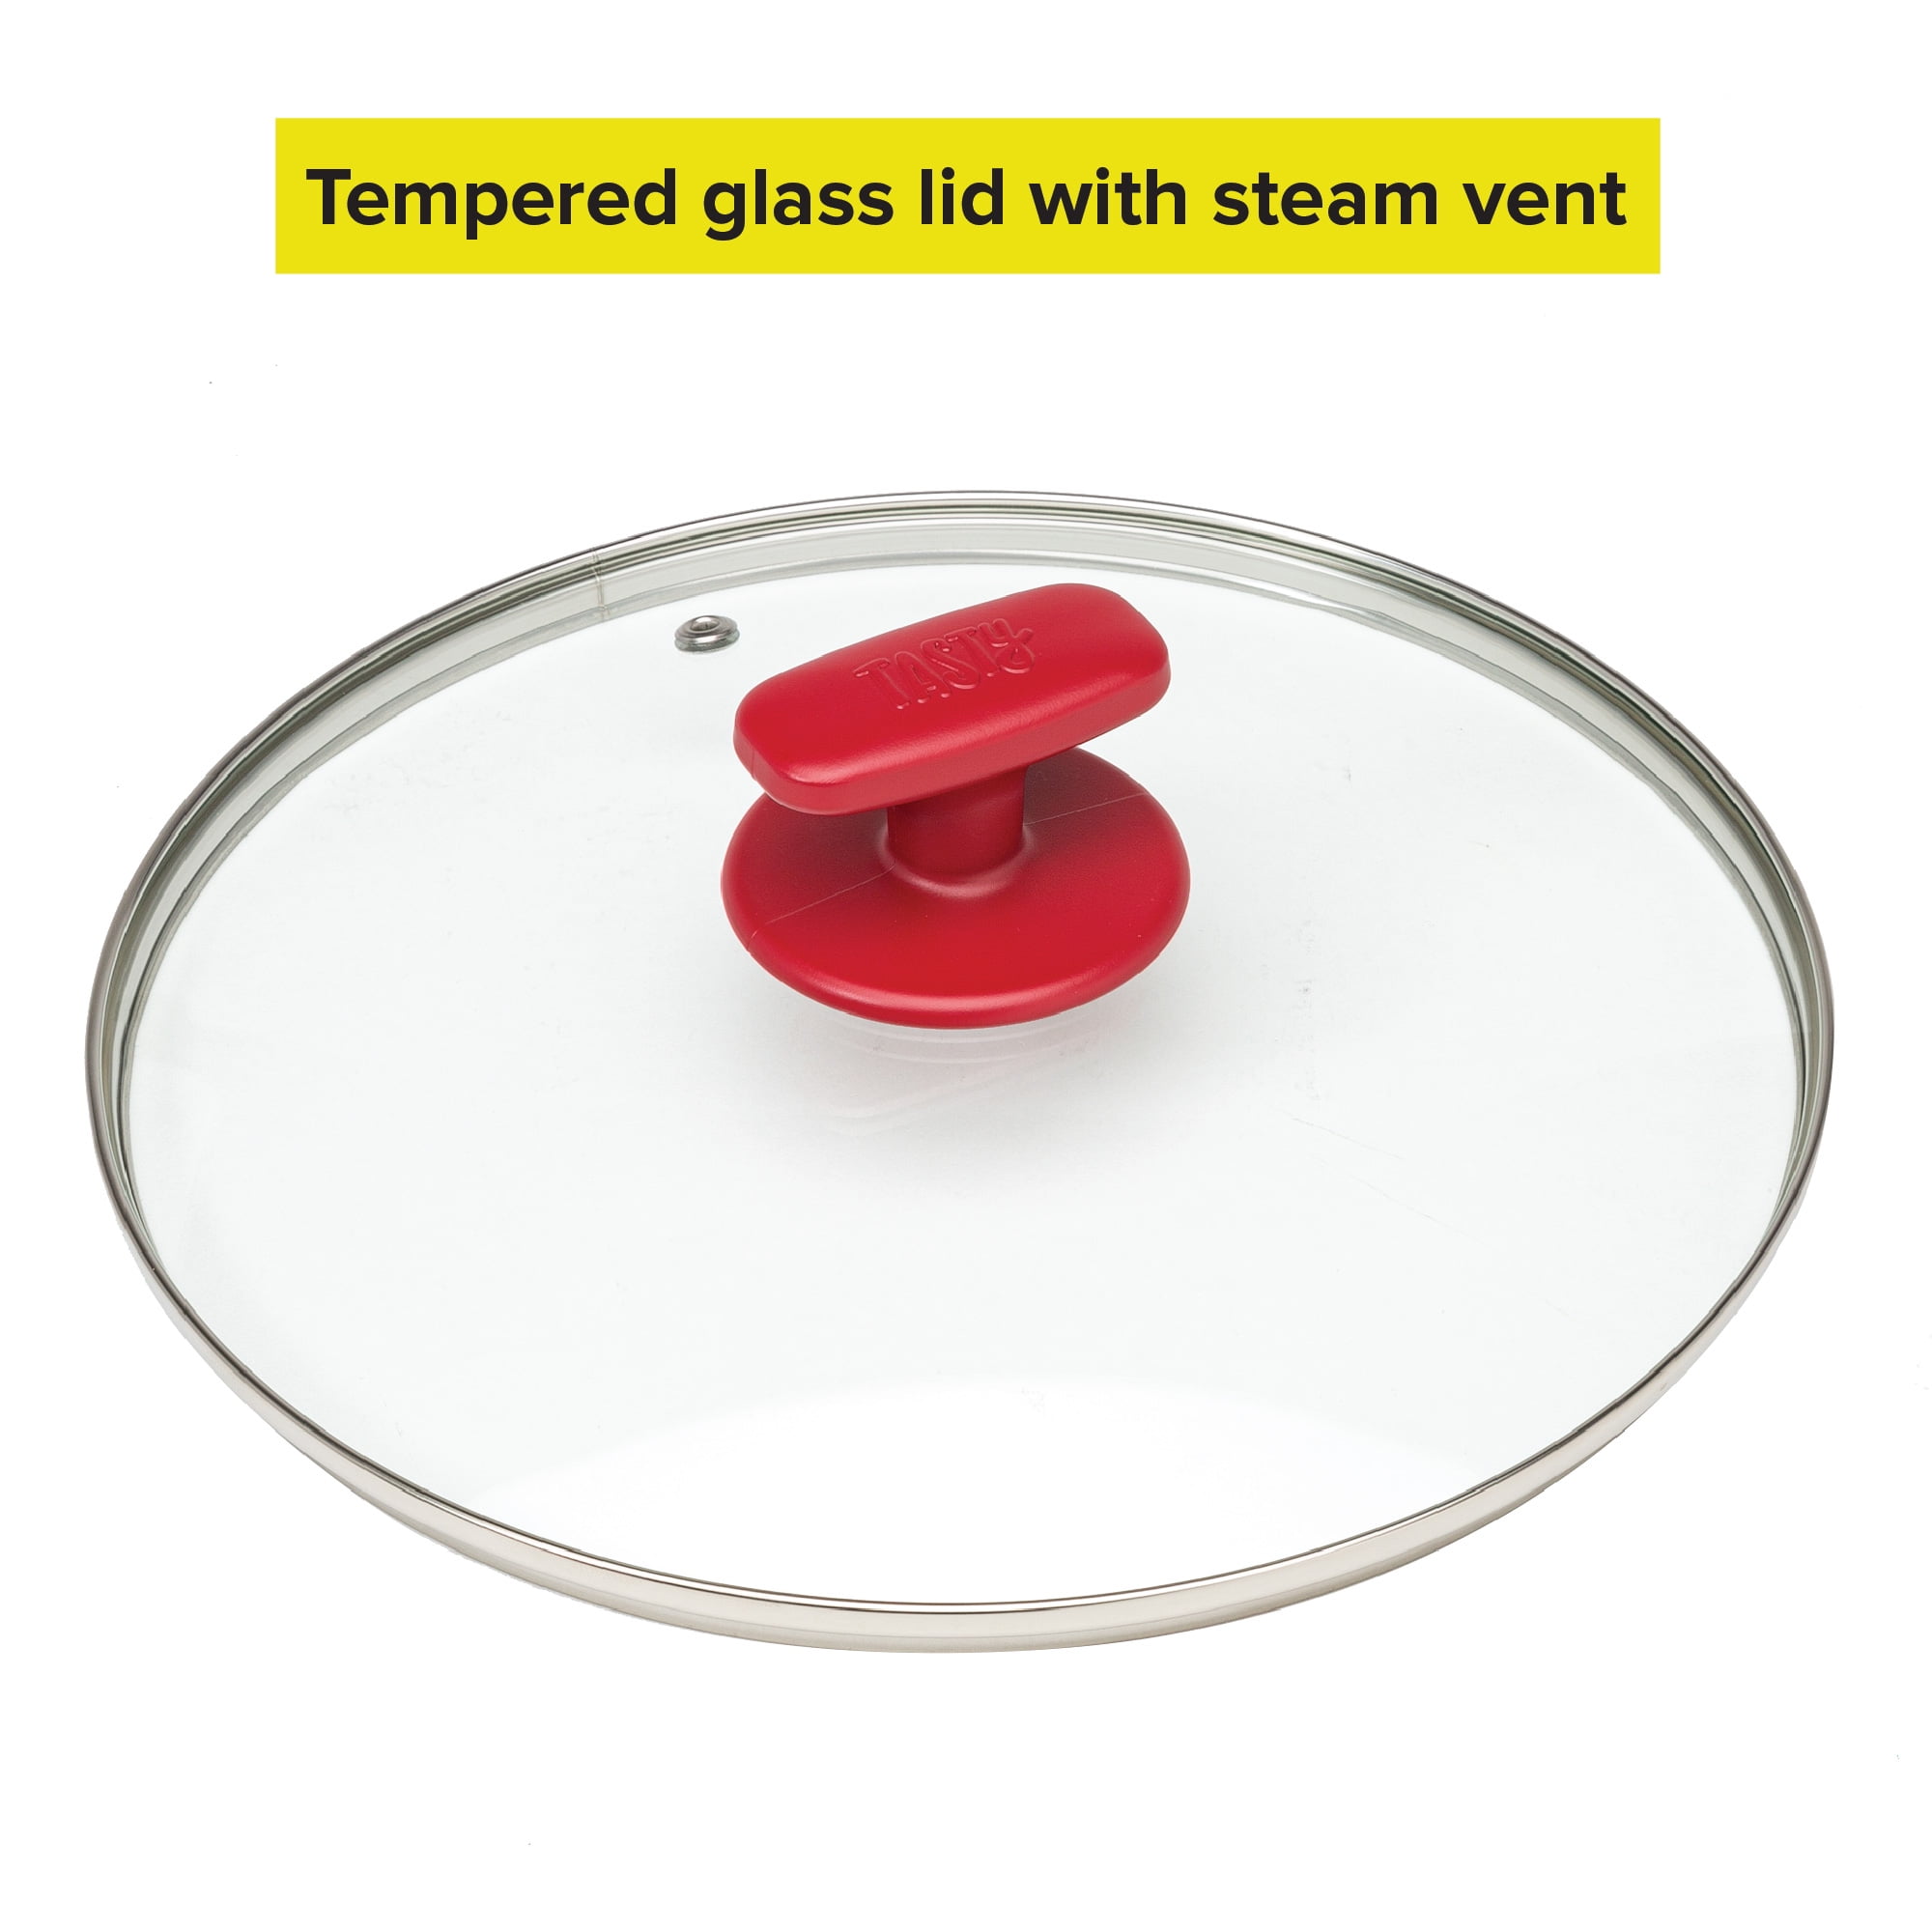 Tasty Titanium-Reinforced Ceramic Saucepan with Glass Lid, Red, 2 Quarts 